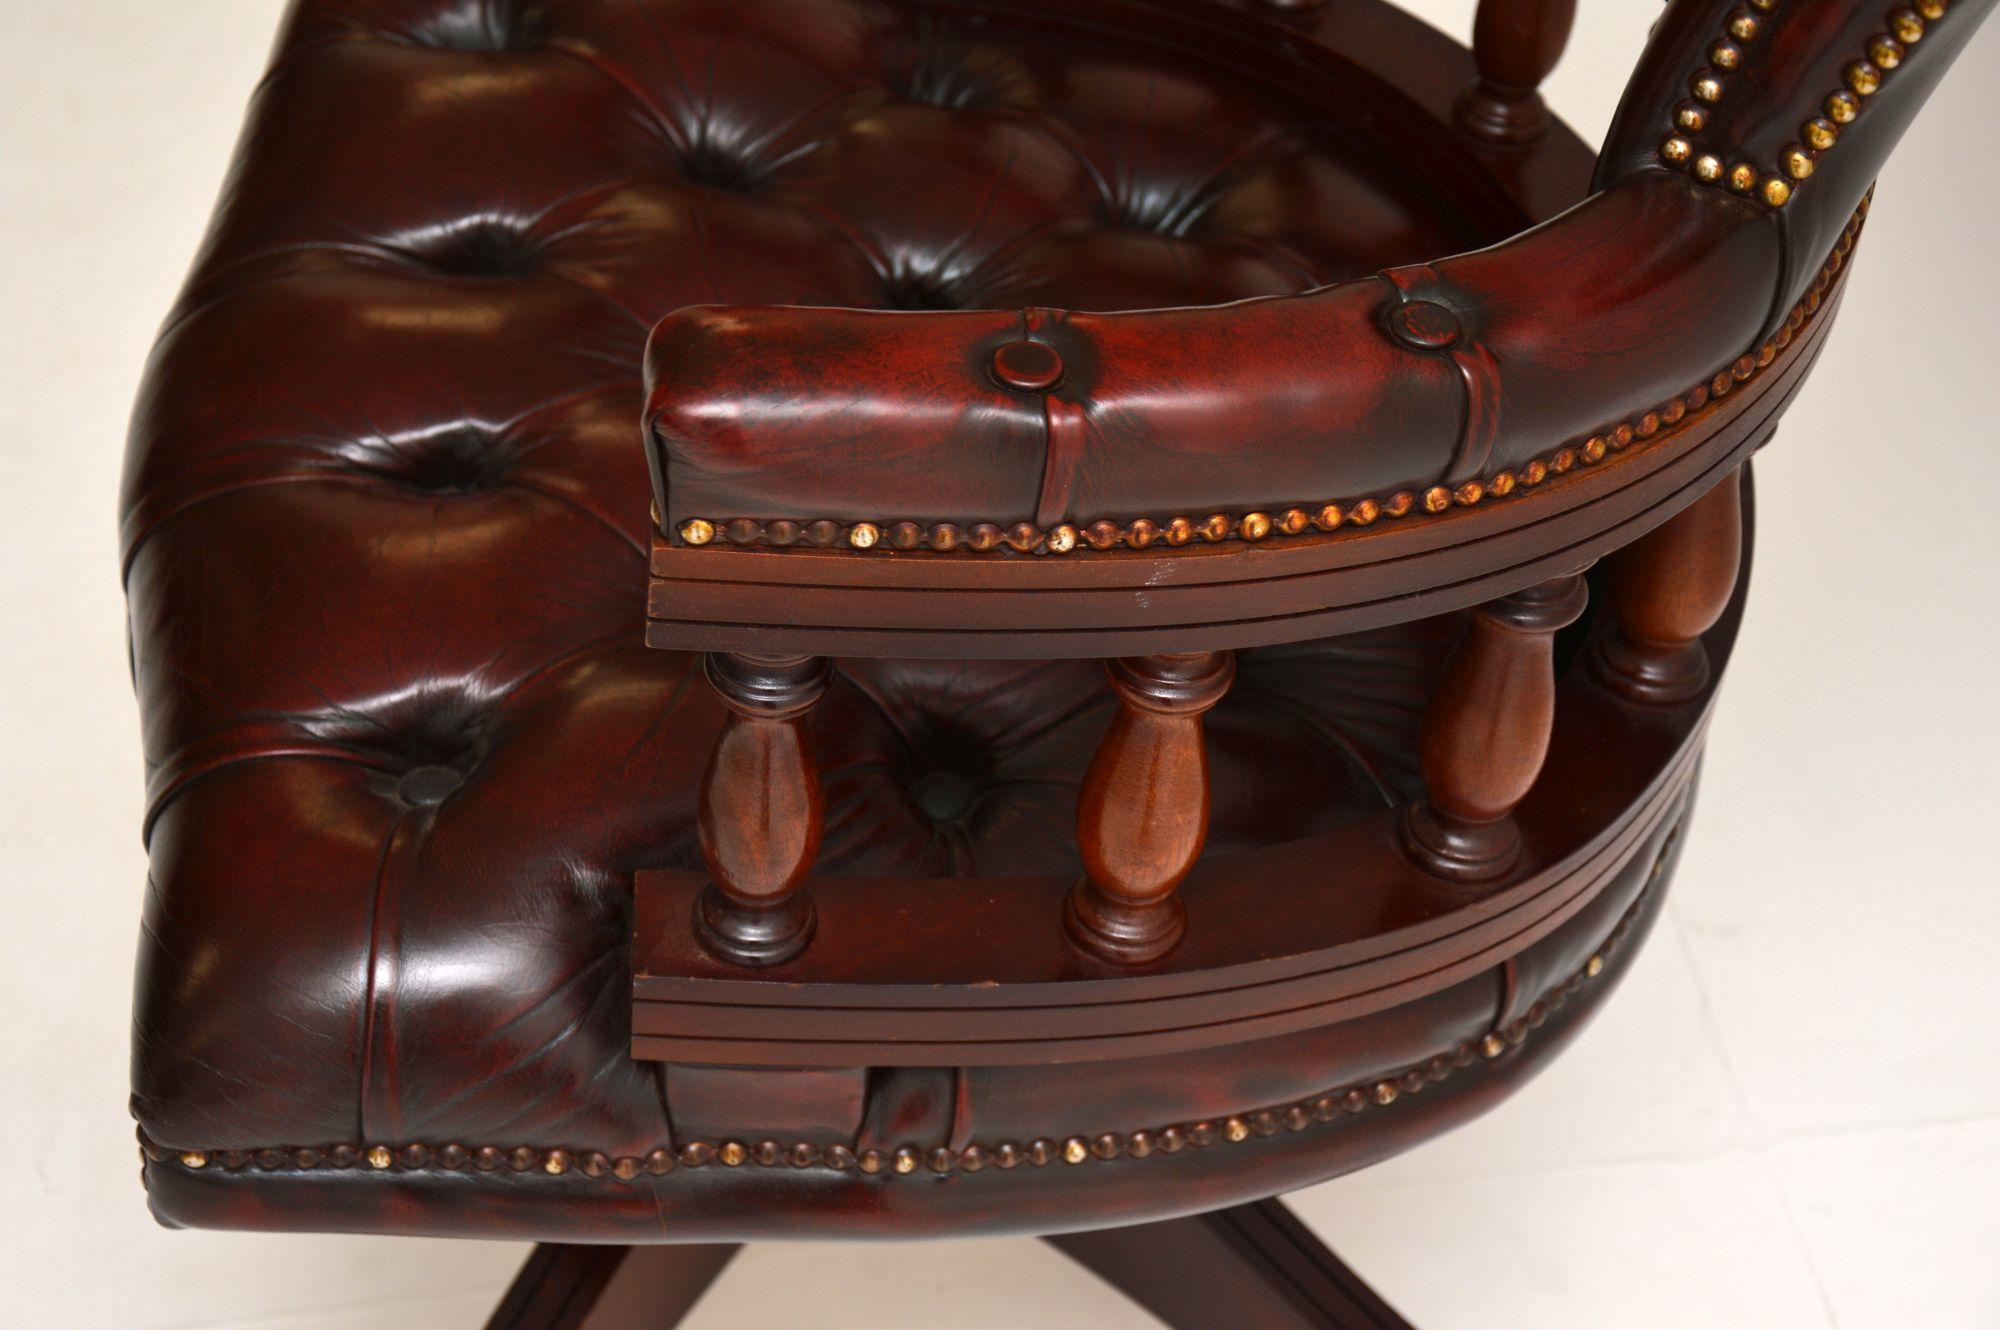 antique leather desk chair